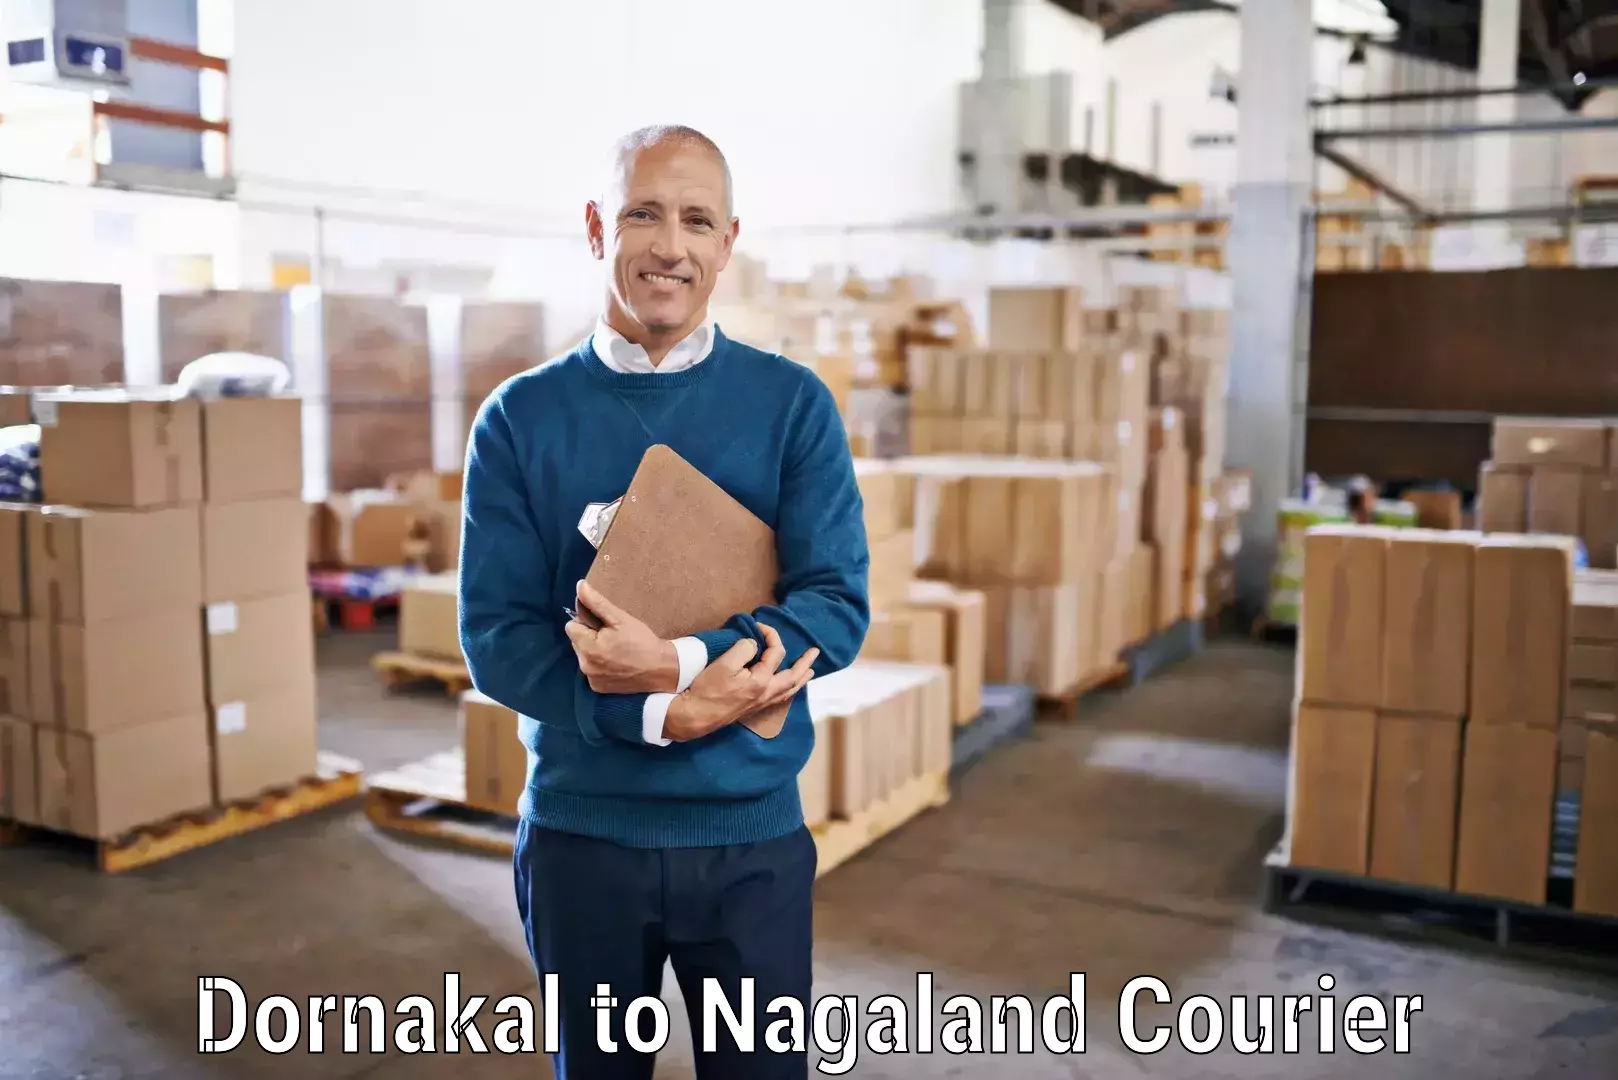 Courier service comparison Dornakal to Mon